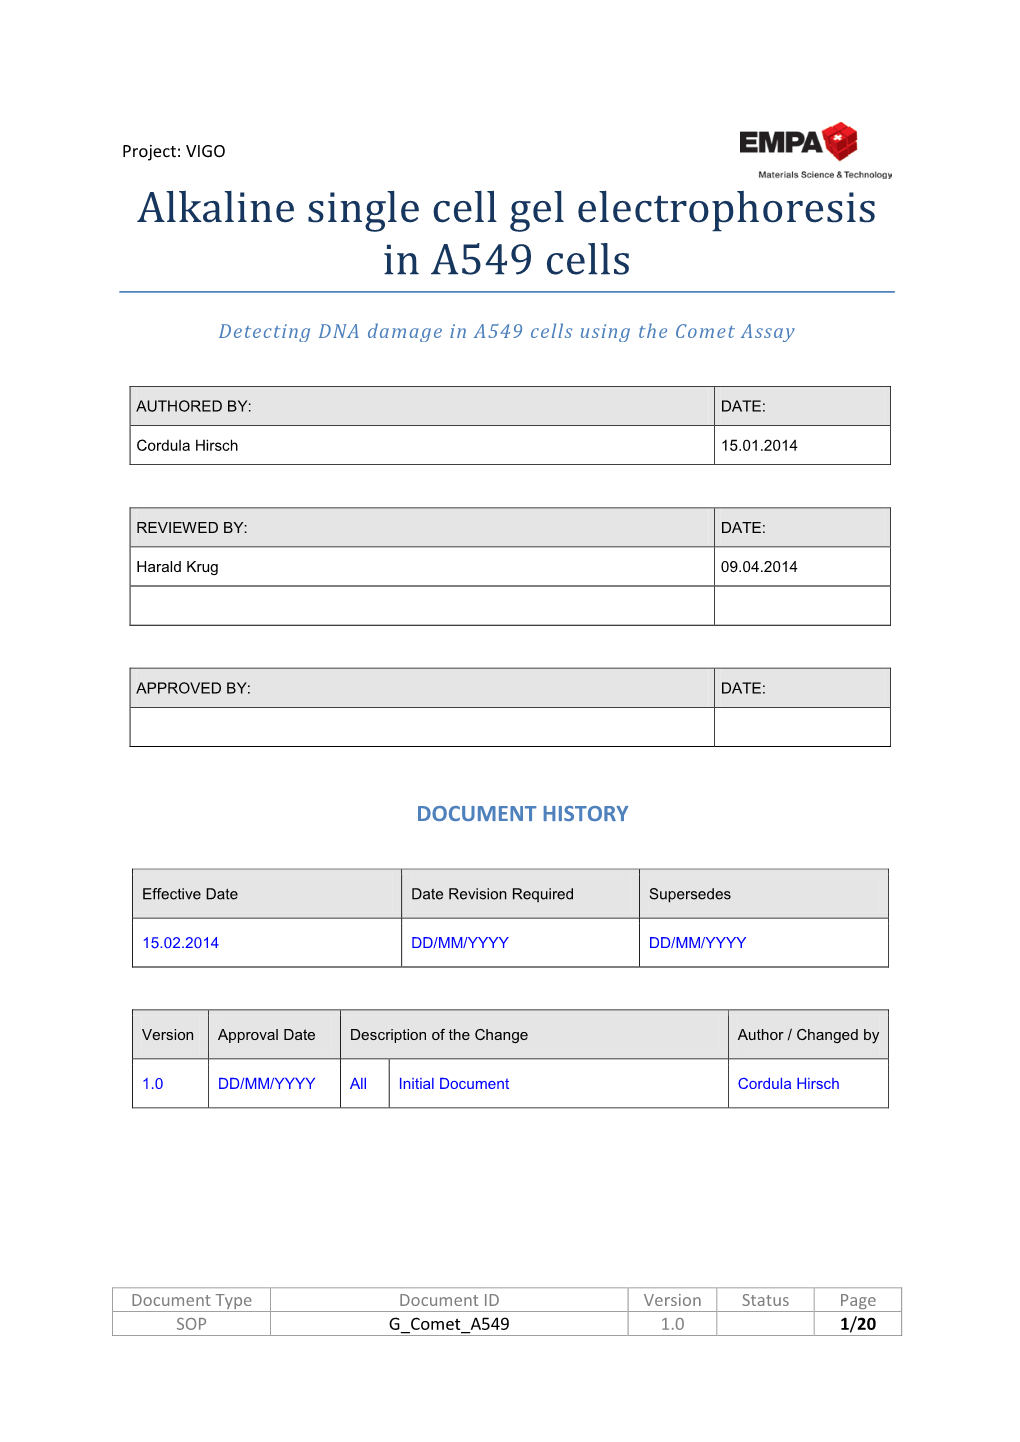 Alkaline Single Cell Gel Electrophoresis in A549 Cells